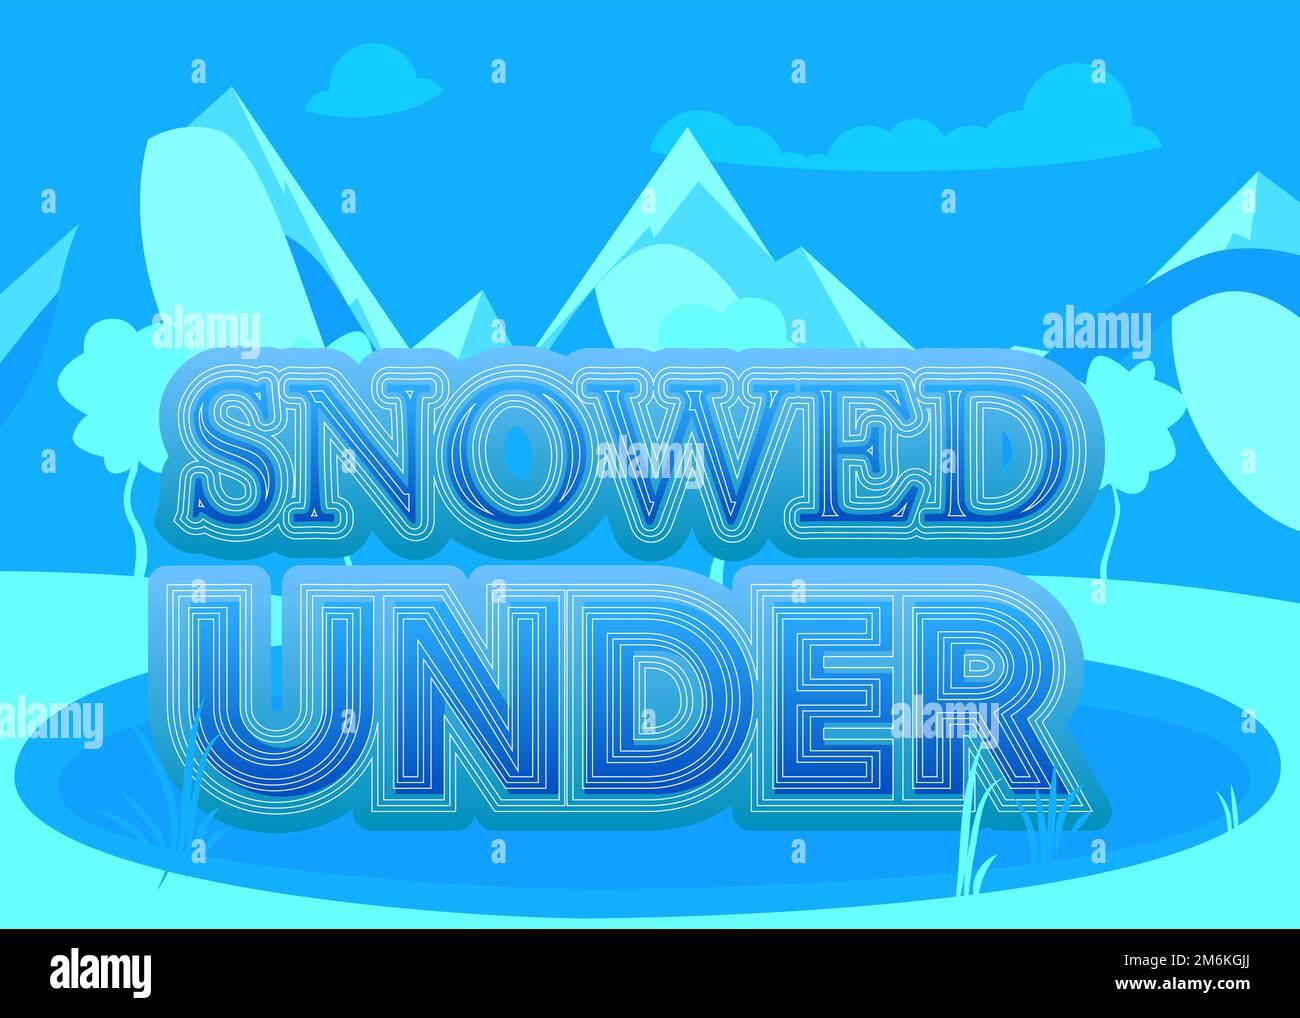 Snowed Under. Word written with Children's font in cartoon style. Stock Vector